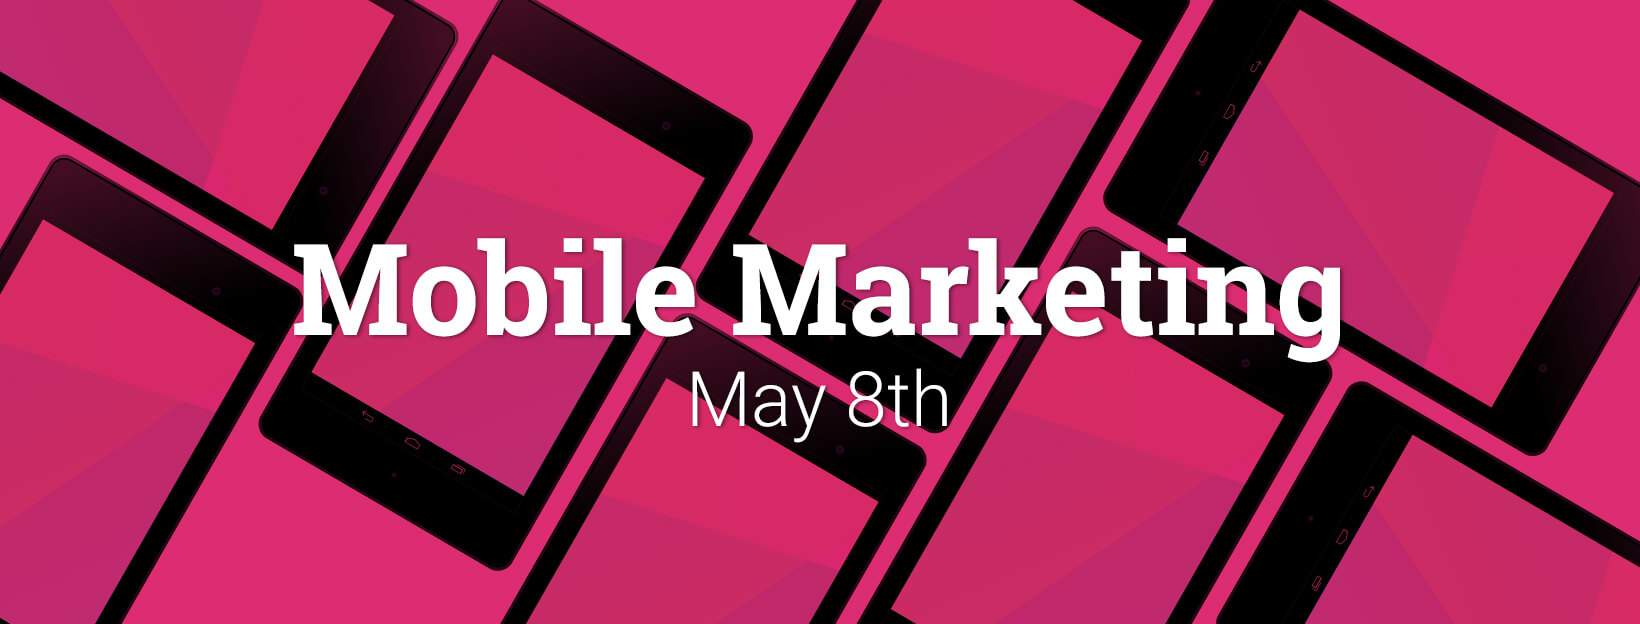 mobile-marketing-lg